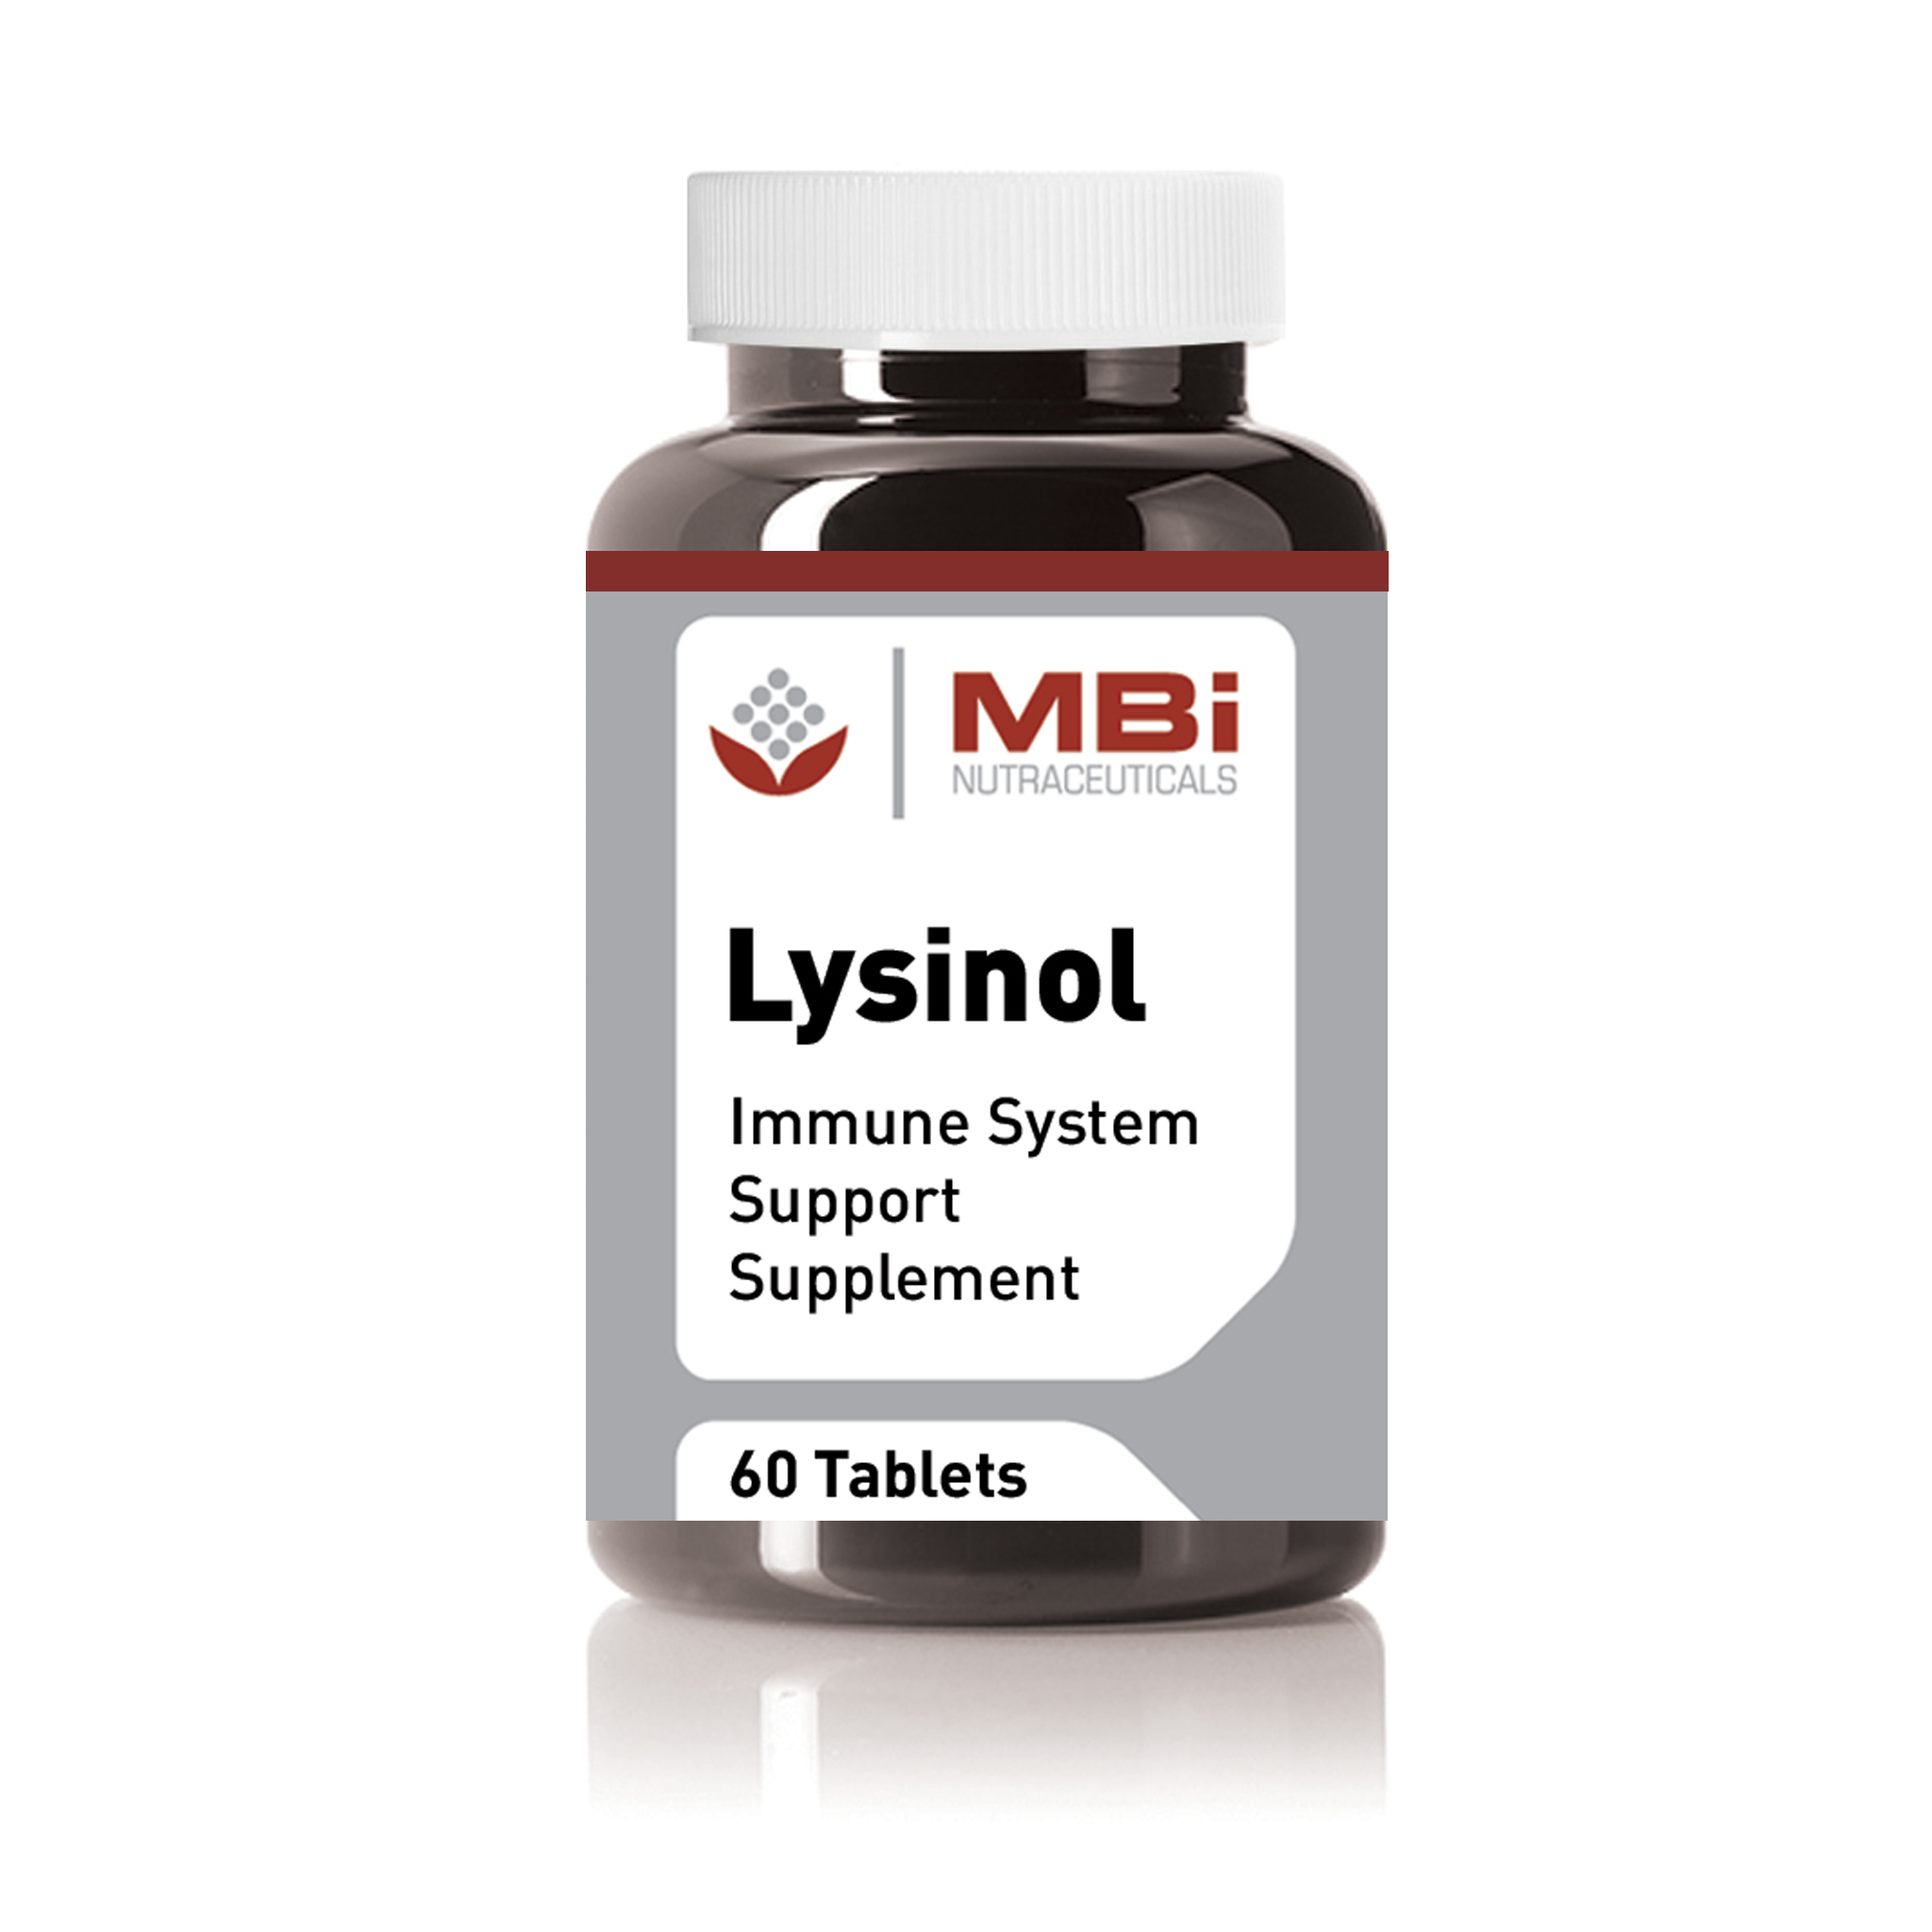 Lysinol